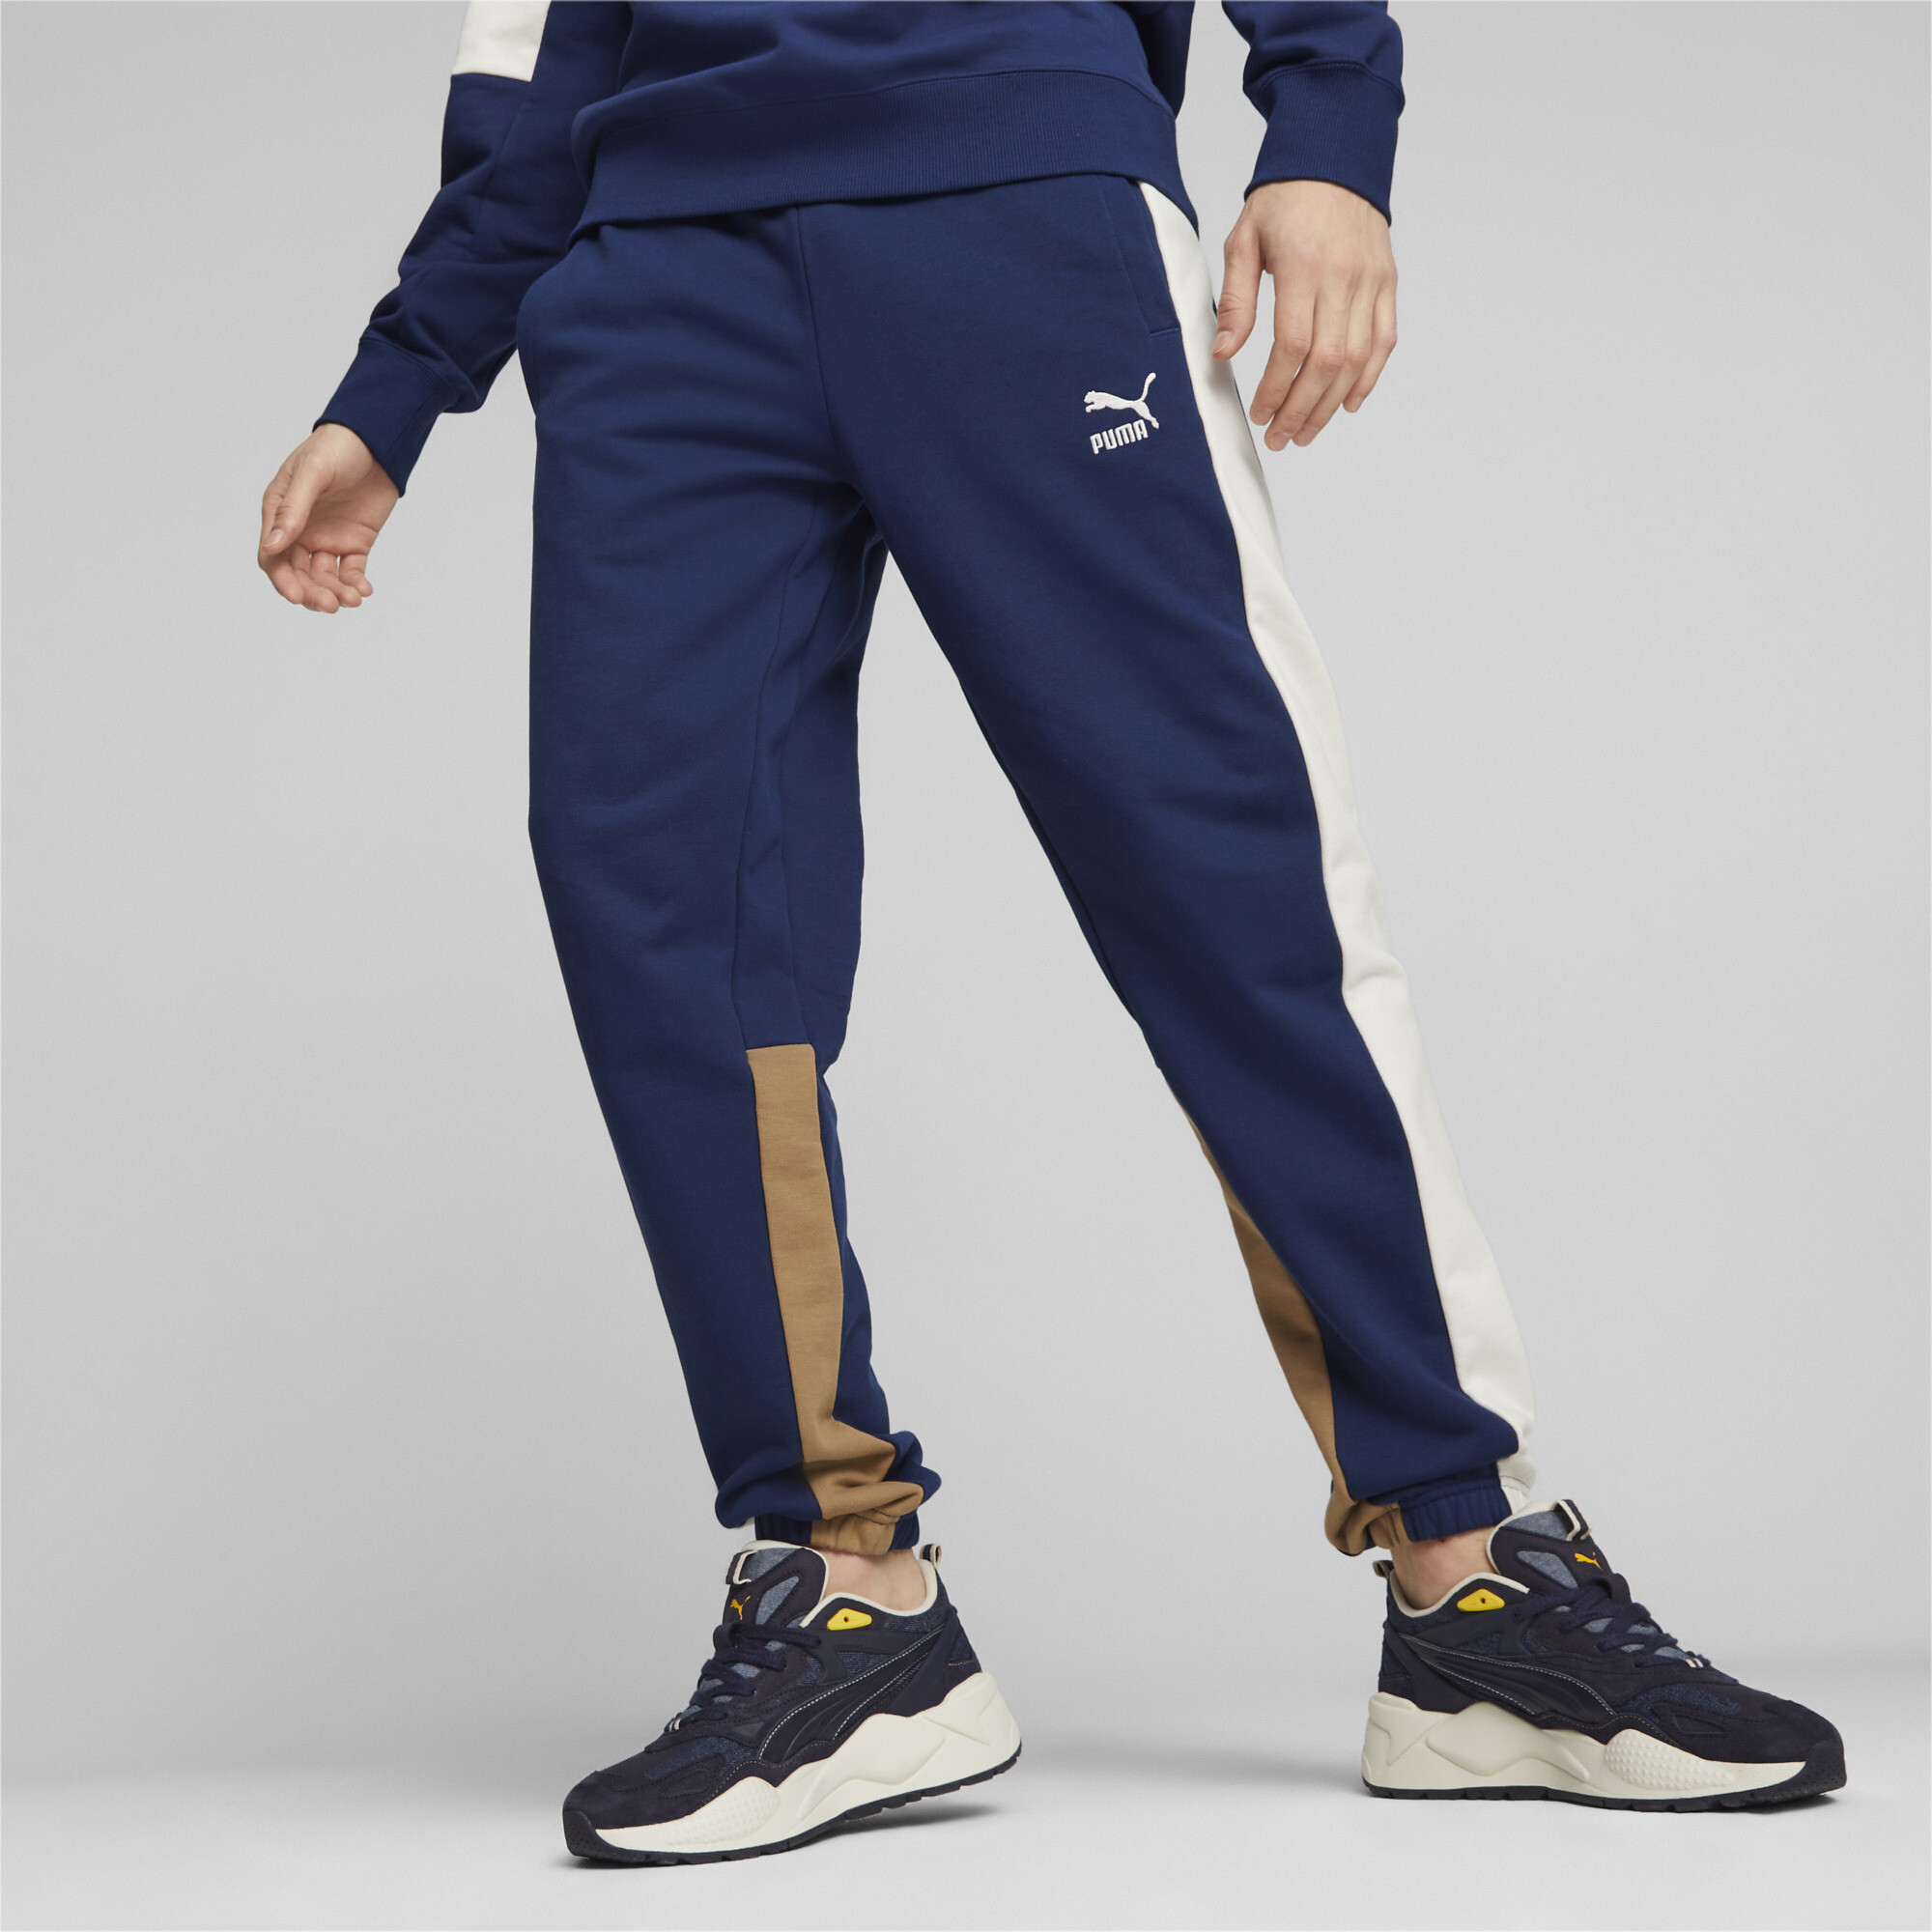 Men's Puma Classics Block's Sweatpants, Blue, Size S, Clothing